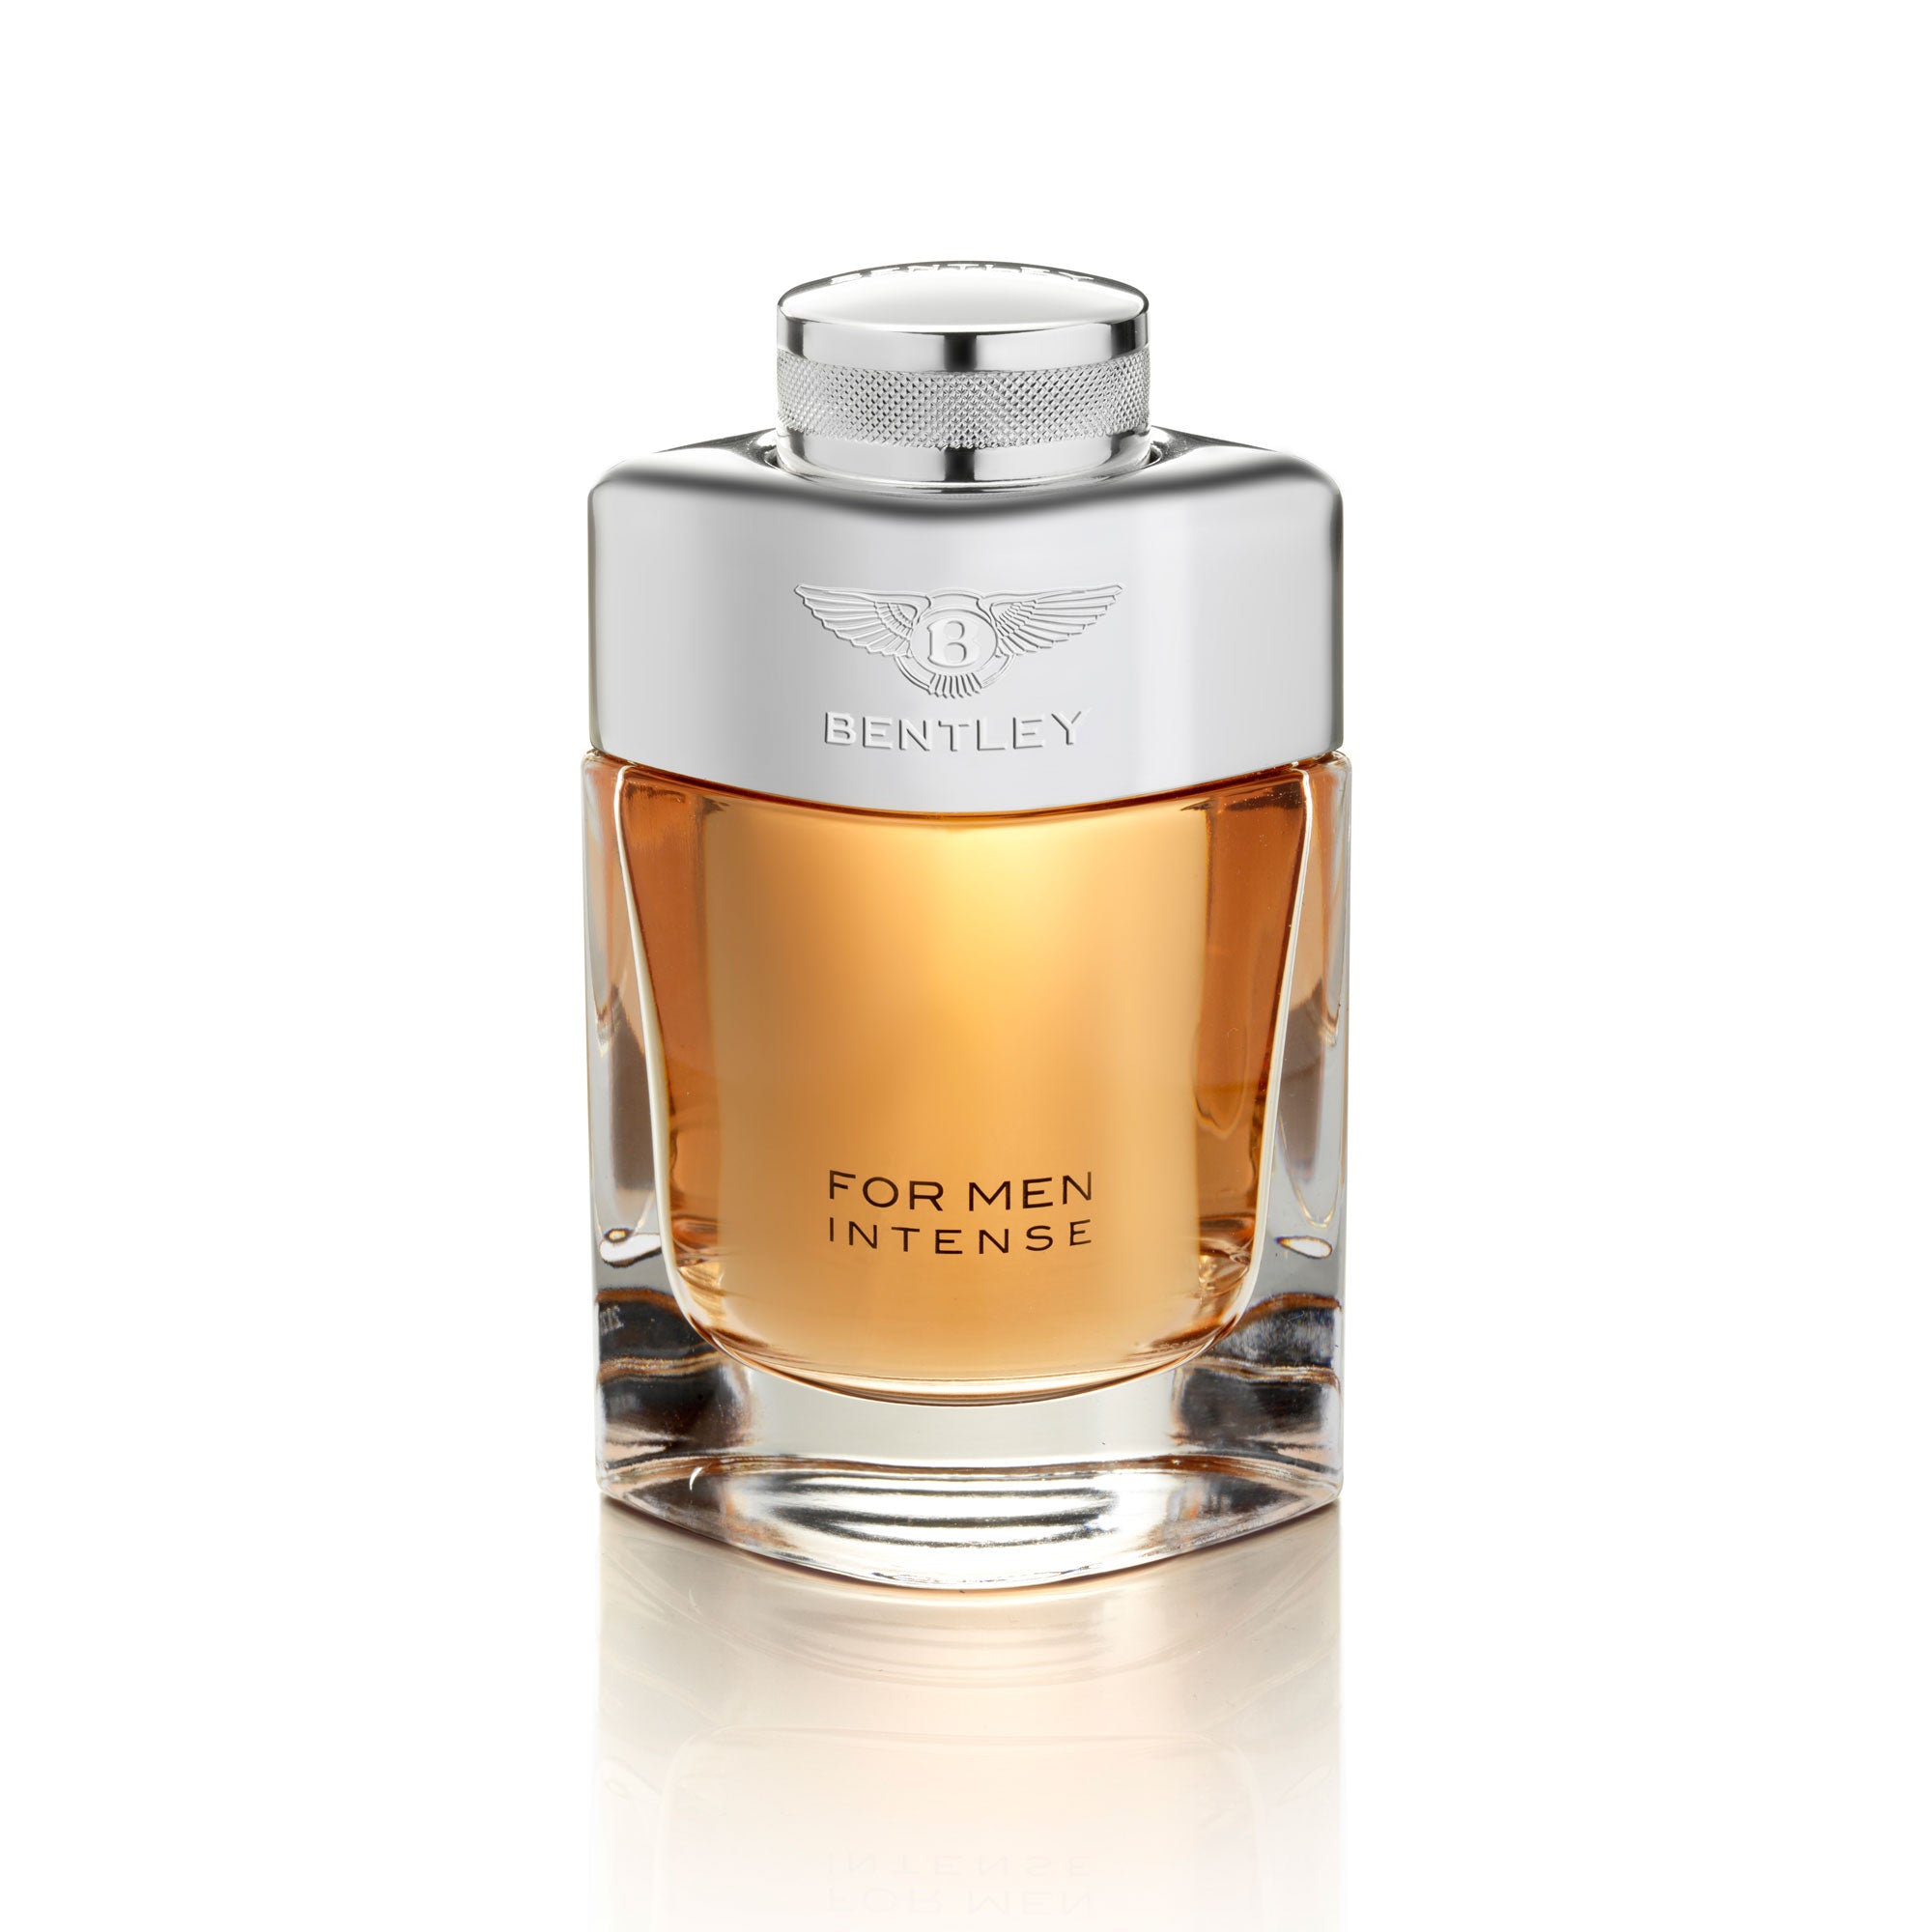 For Men Intense Eau de Parfum – The Bentley Collection